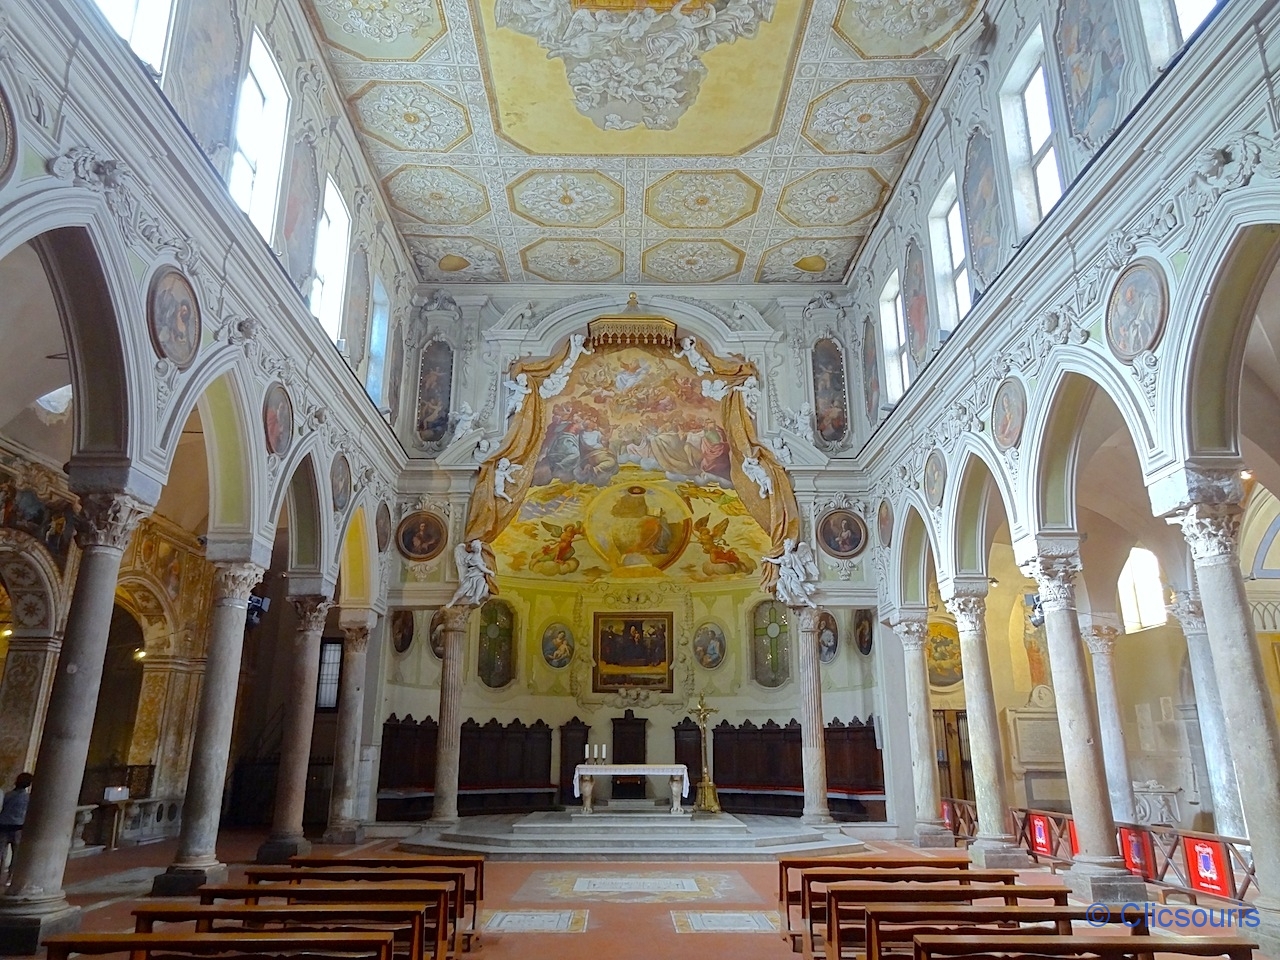 Basilica di Santa restituta dans le Duomo de Naples